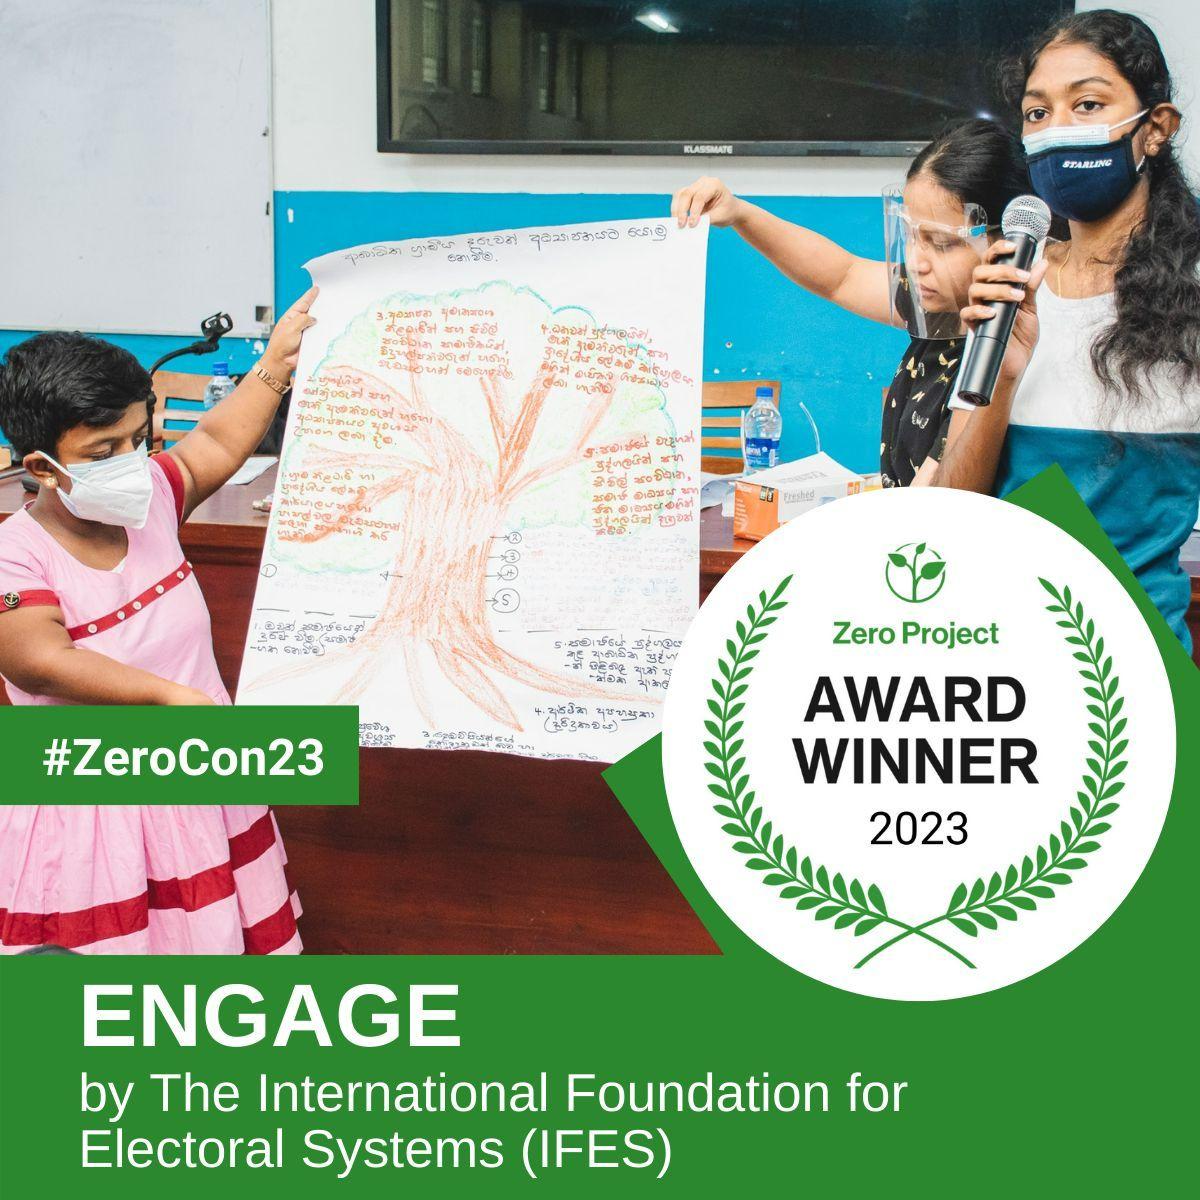 #ZeroCon23 Zero Project Award Winner 23 